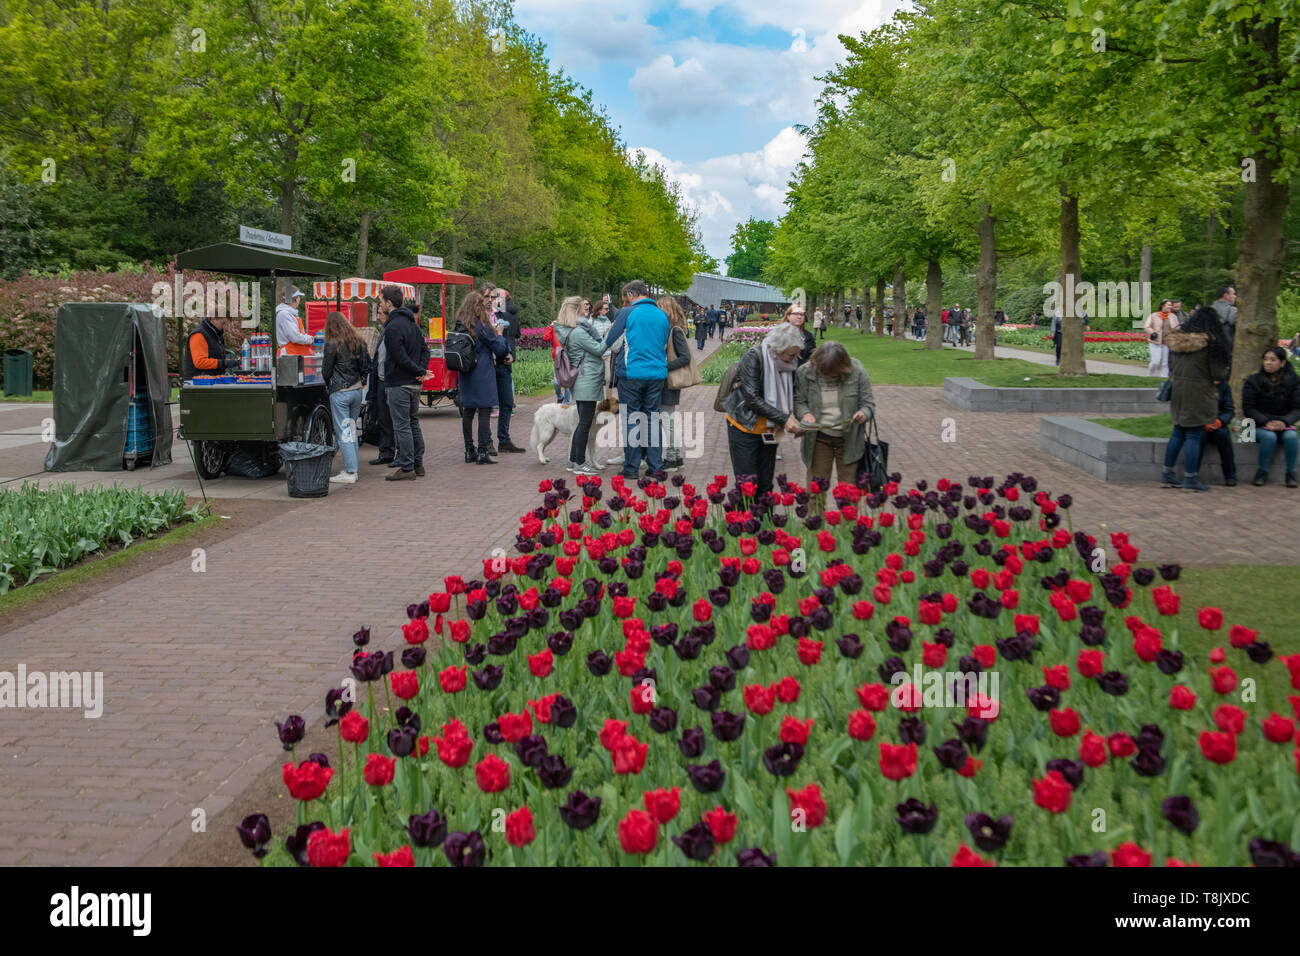 Keukenhof Gardens tourists - Netherlands - tourism tulips - red and purple tulips - tulip flower beds - tulip flowers - red tulips - purple tulips Stock Photo